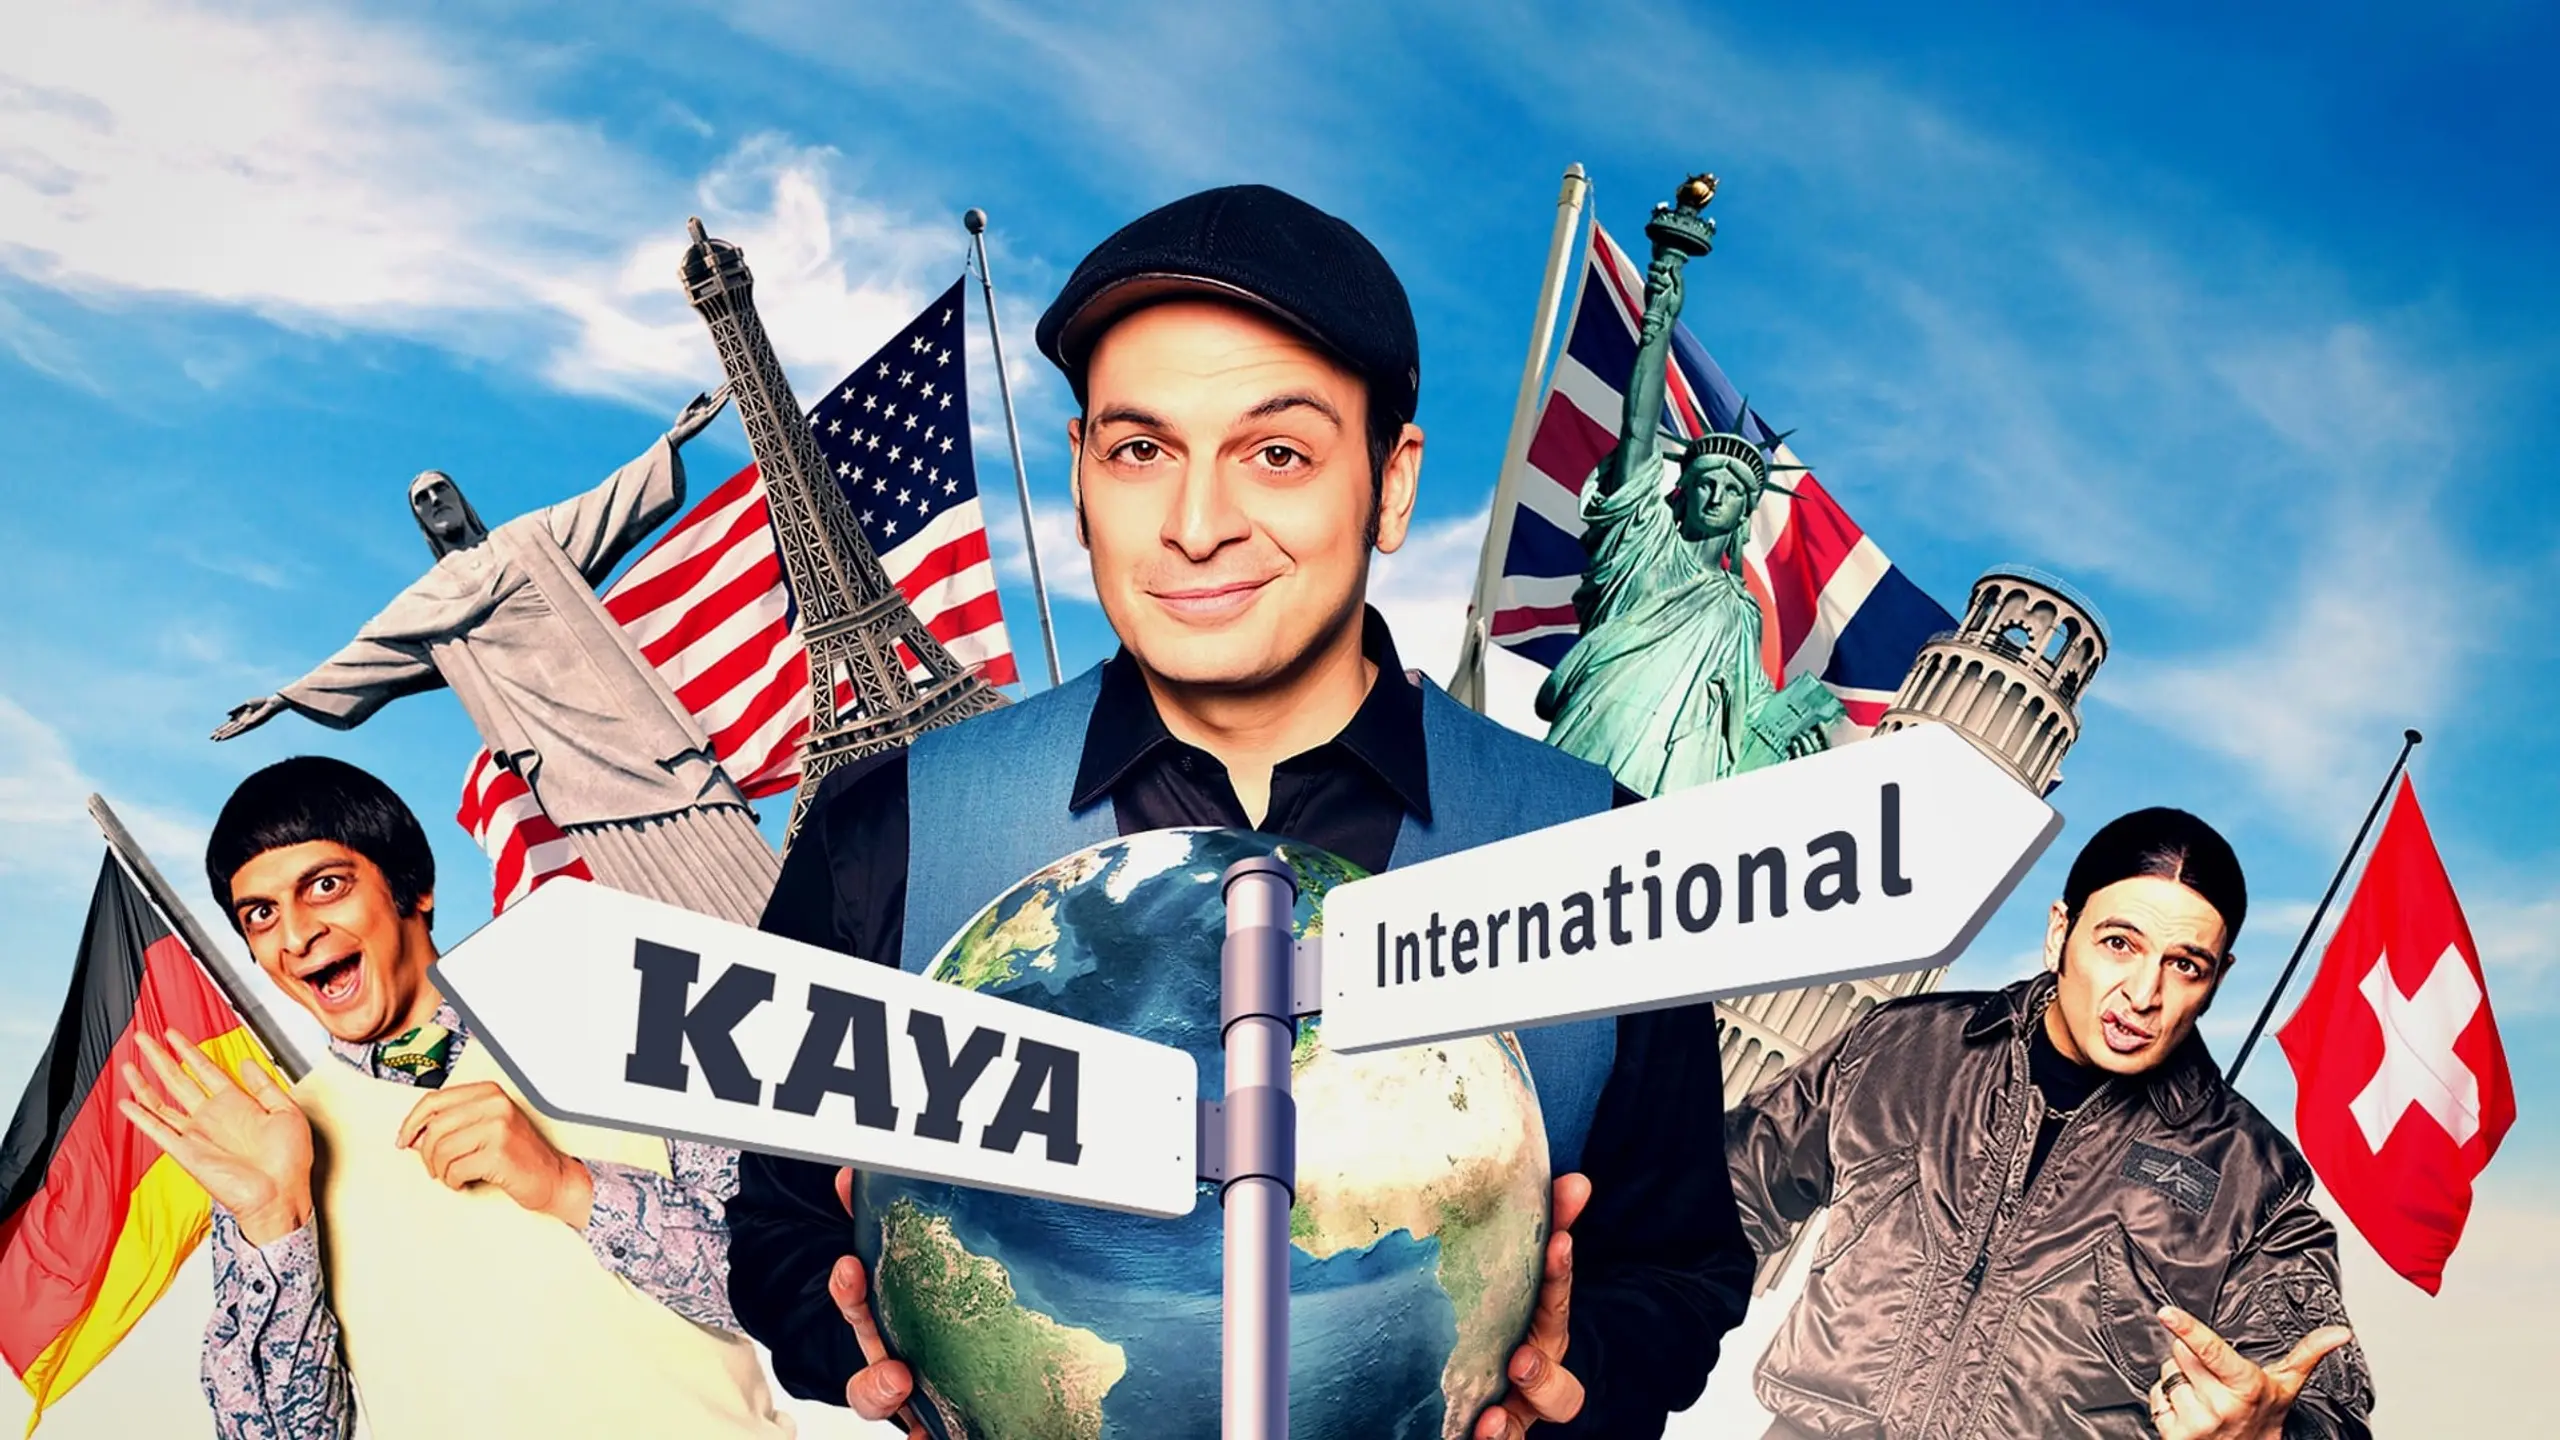 Kaya Yanar - Around the World